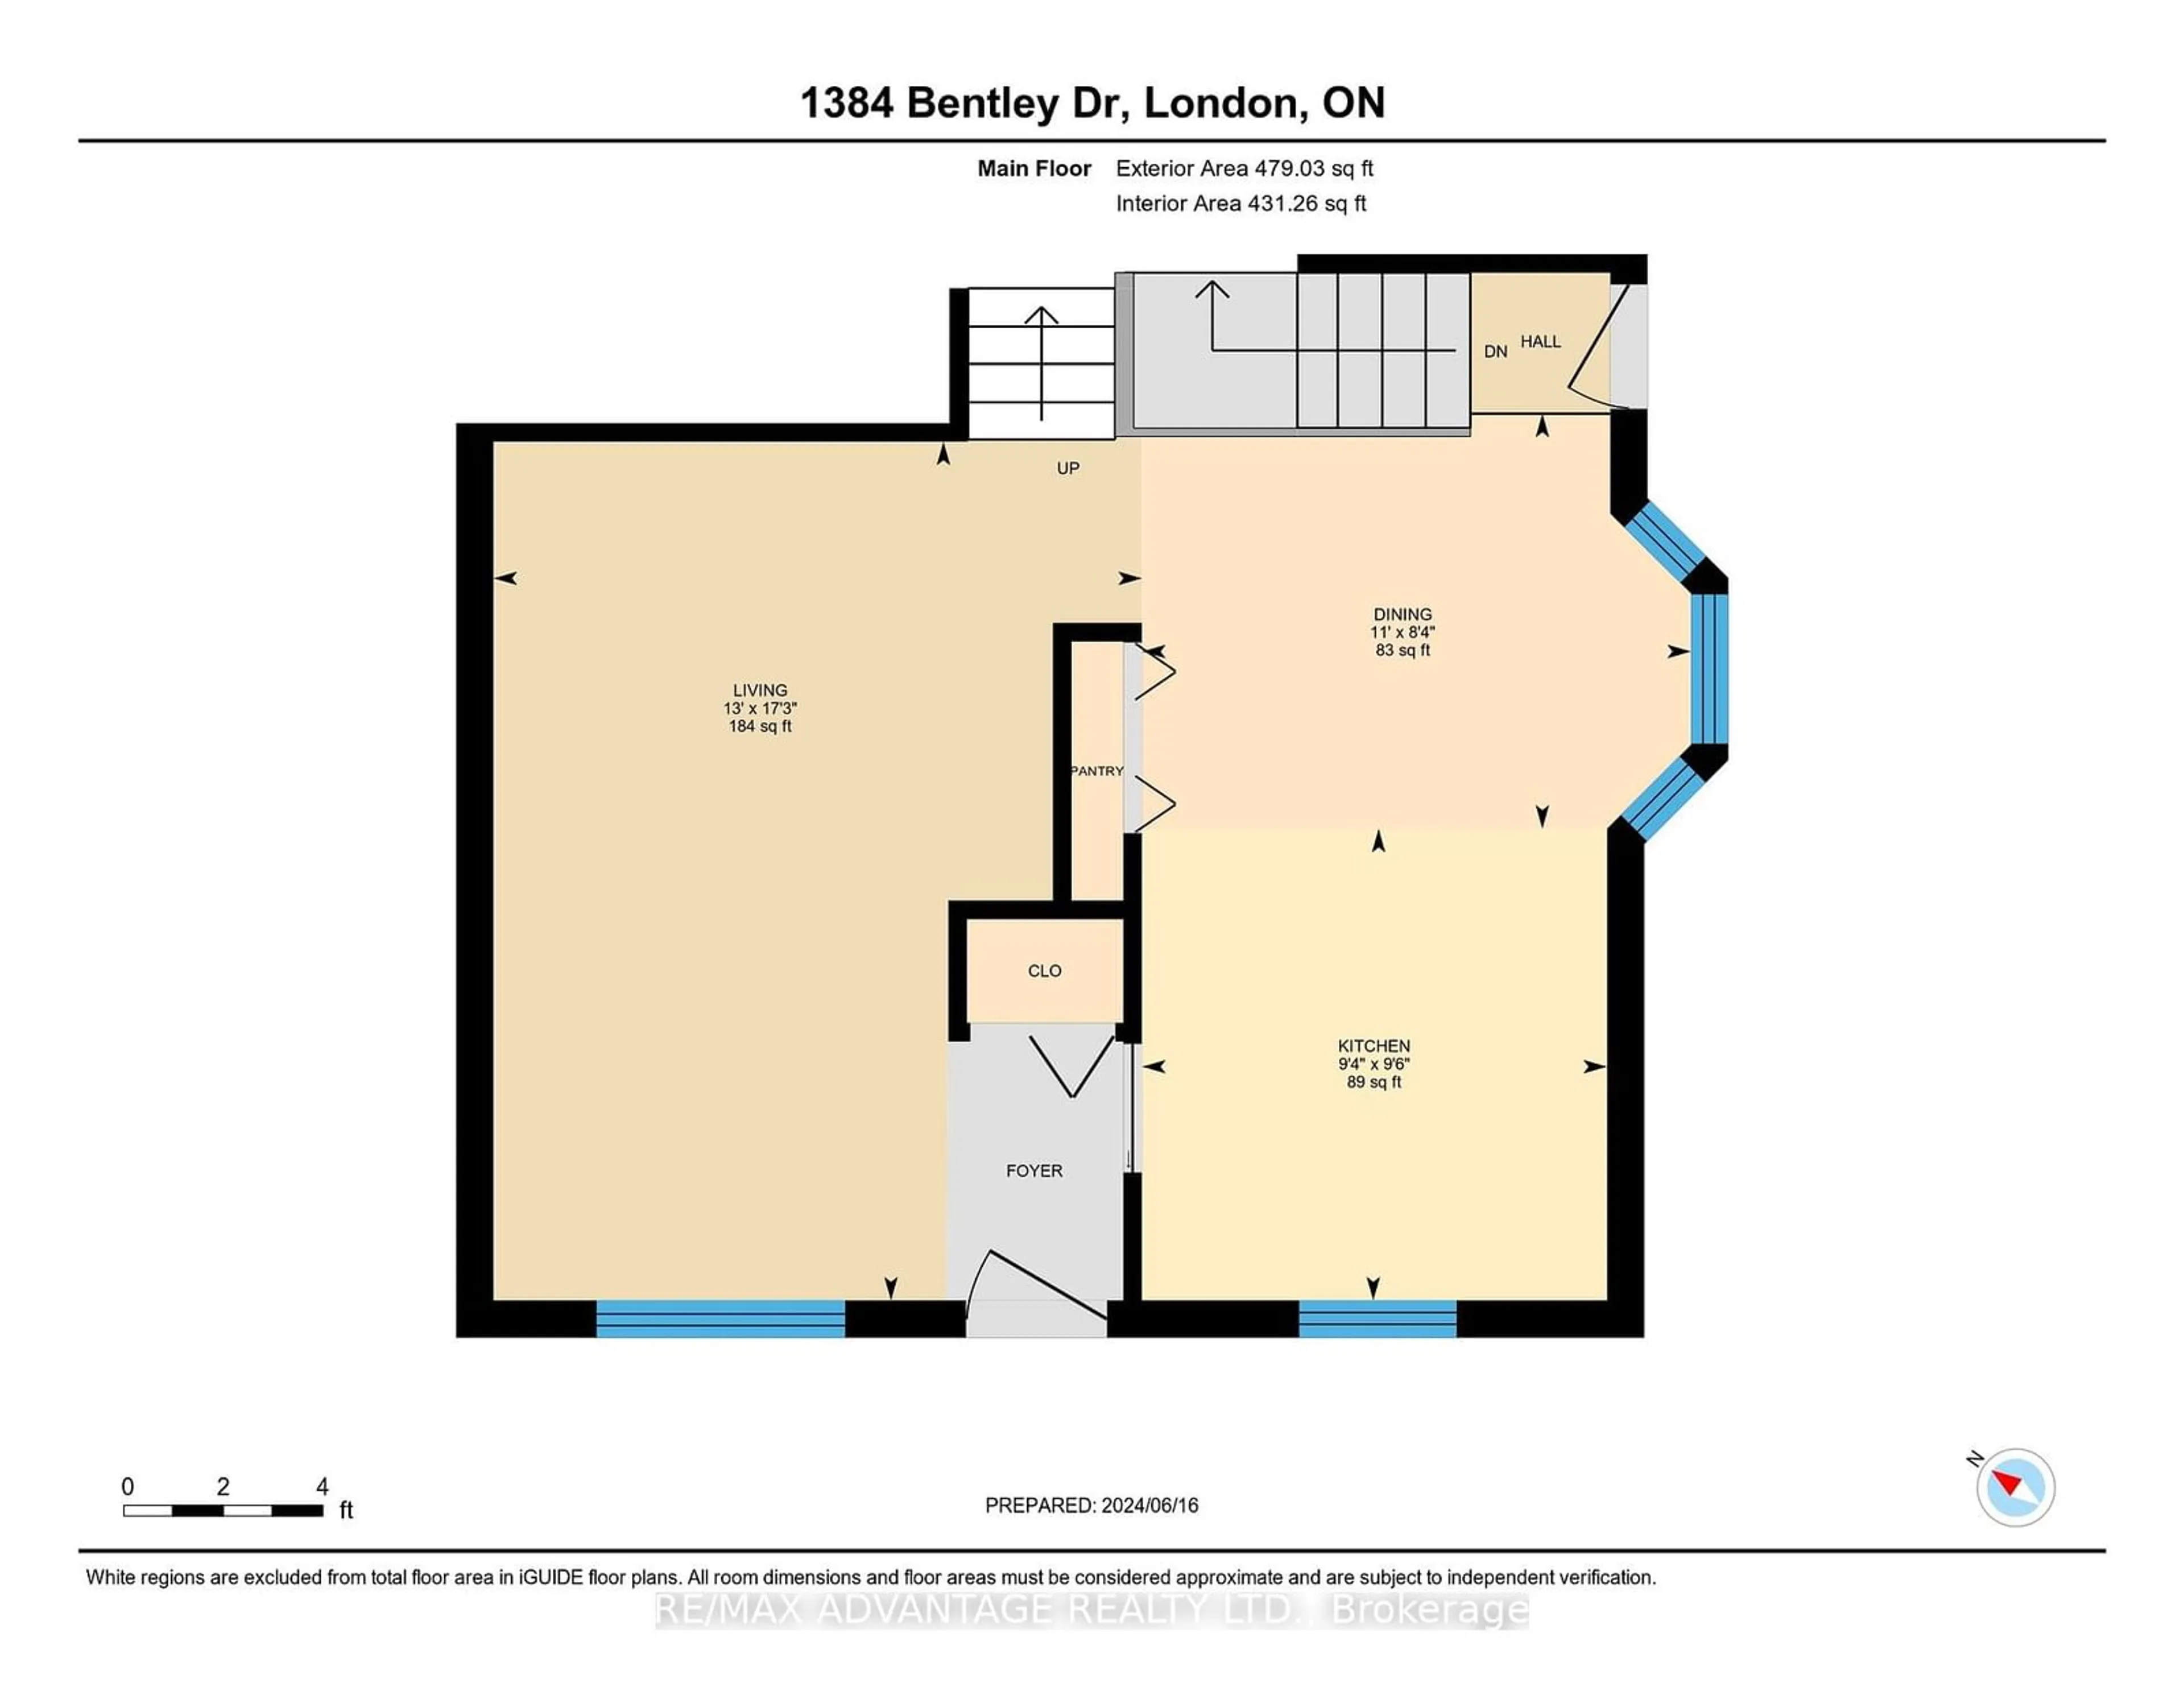 Floor plan for 1384 Bentley Dr, London Ontario N5V 3T6